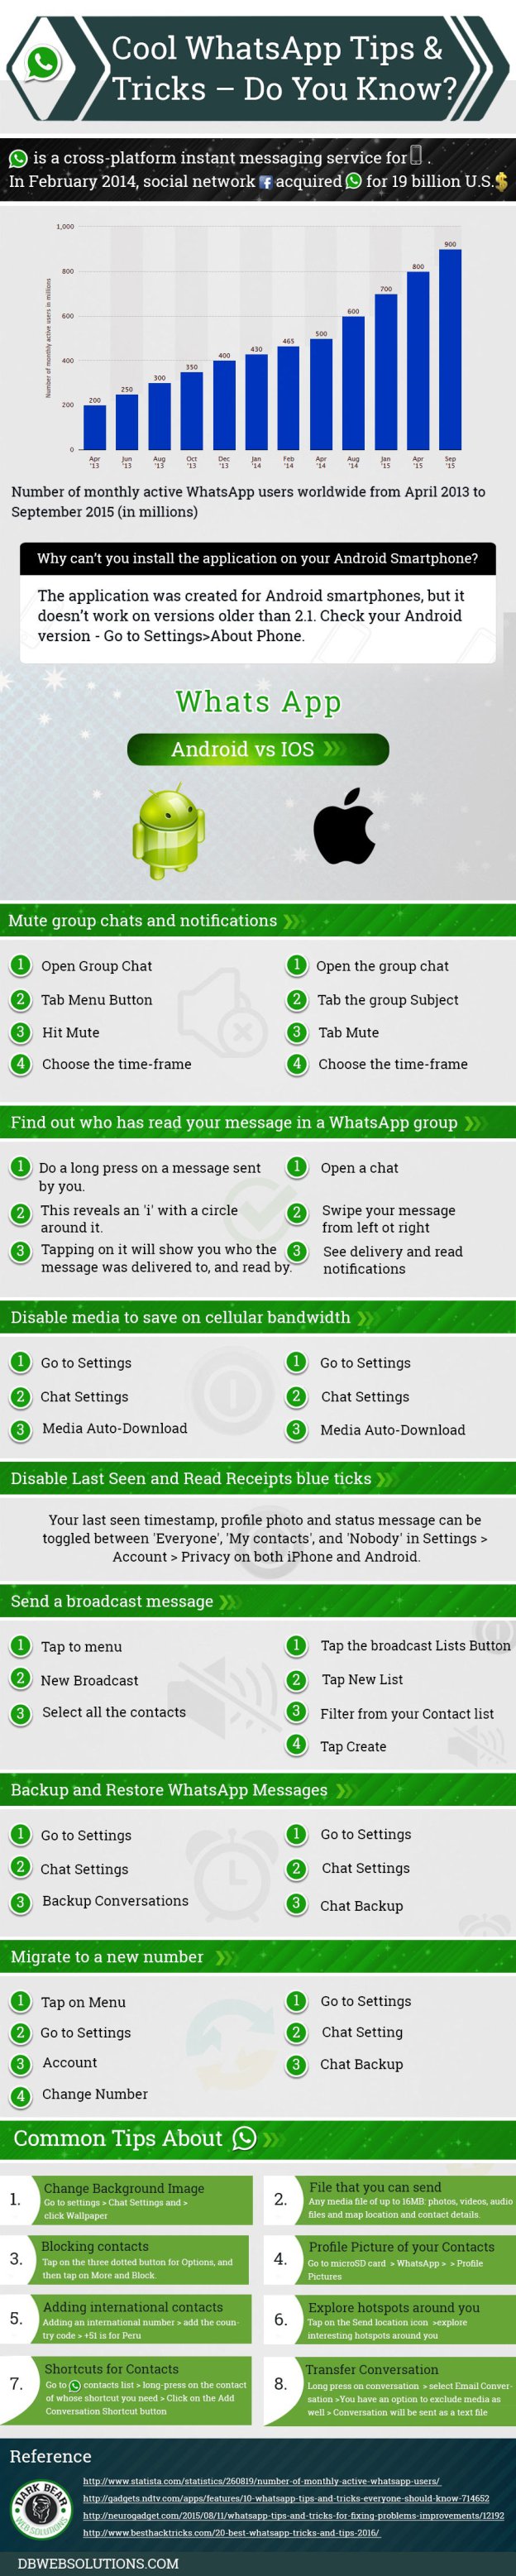 whatsapp-15-funciones-escondidas-infografia